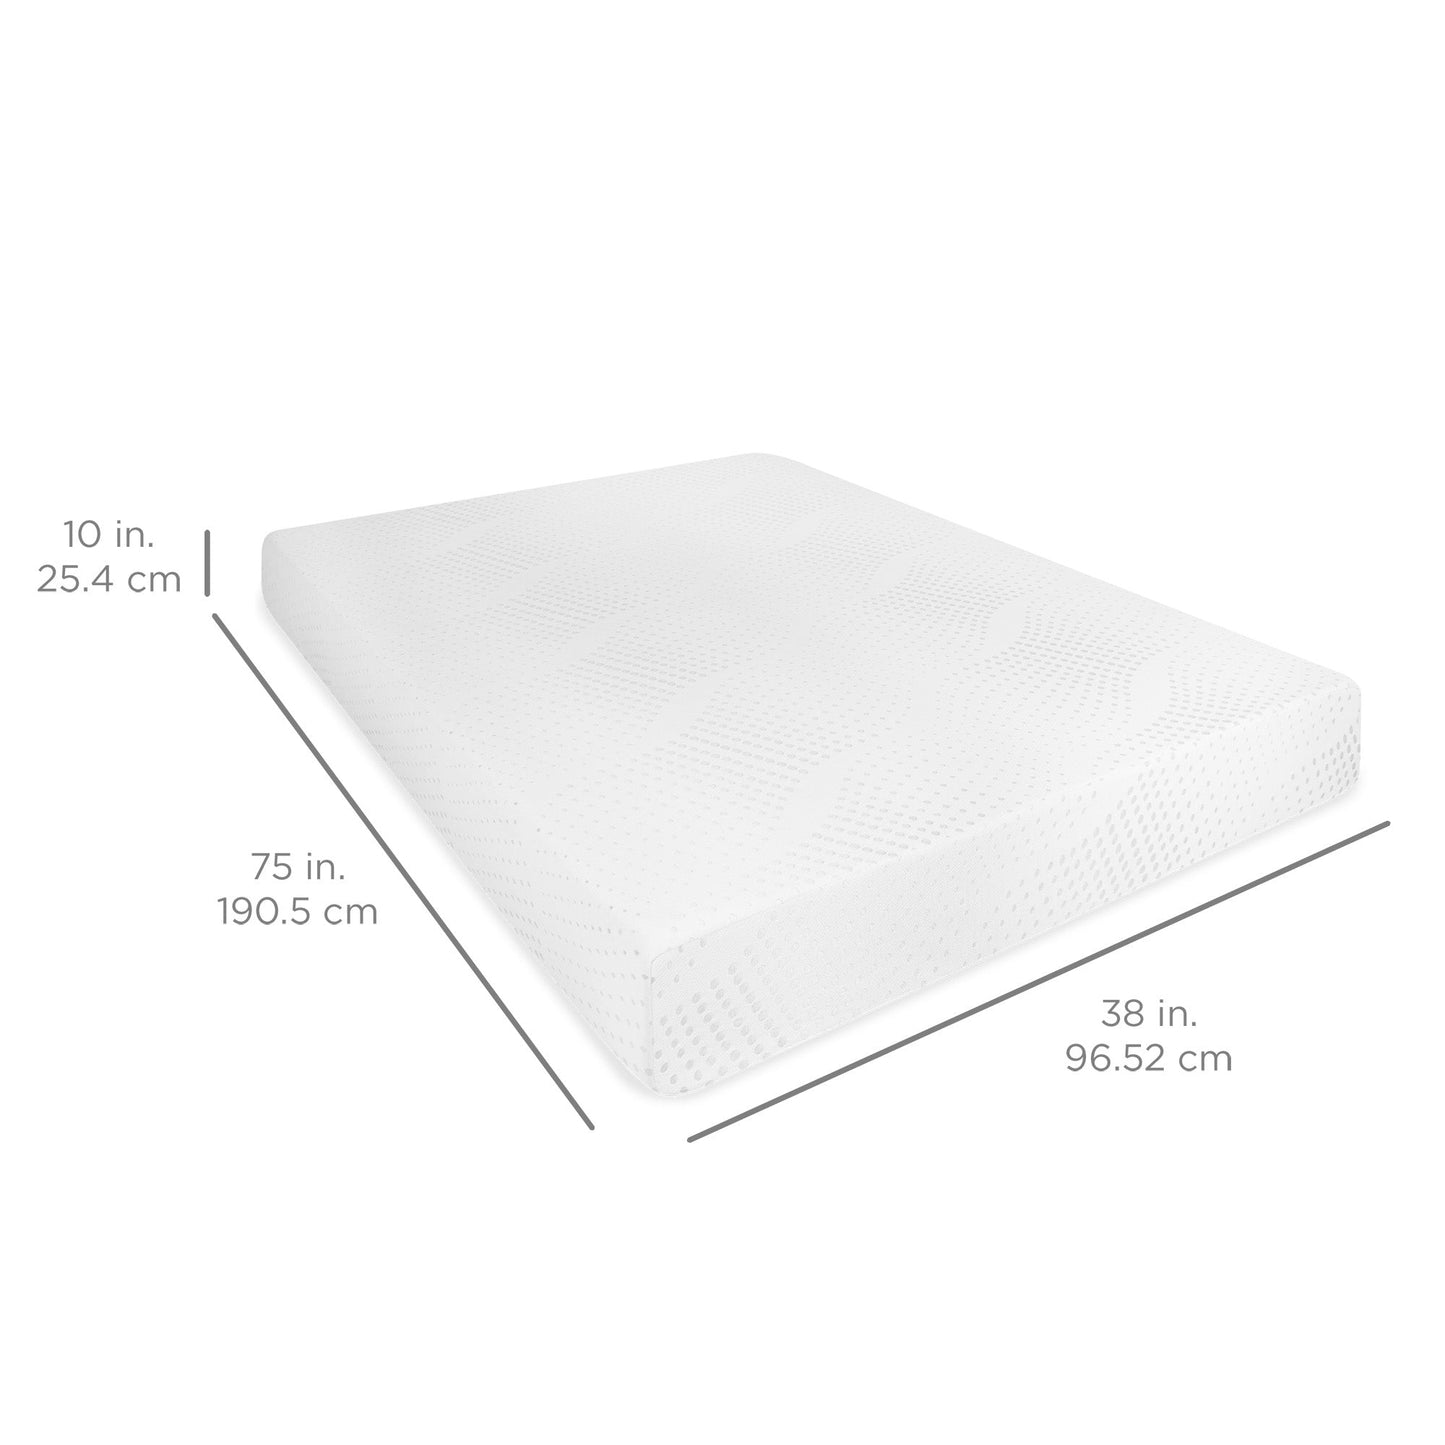 10in Dual Layered Memory Foam Mattress w/ CertiPUR-US Certified Foam